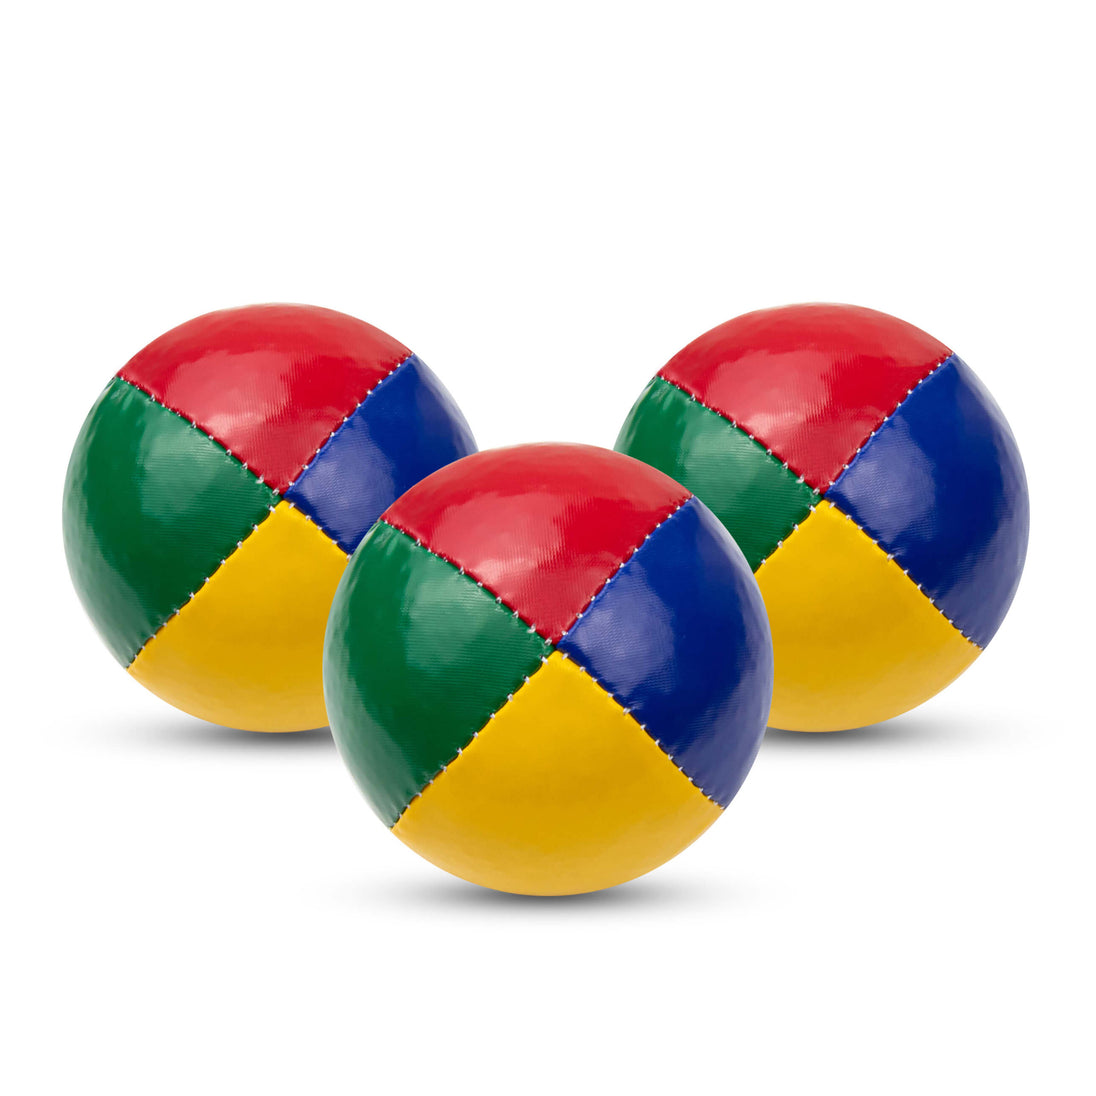 Three beach juggling balls